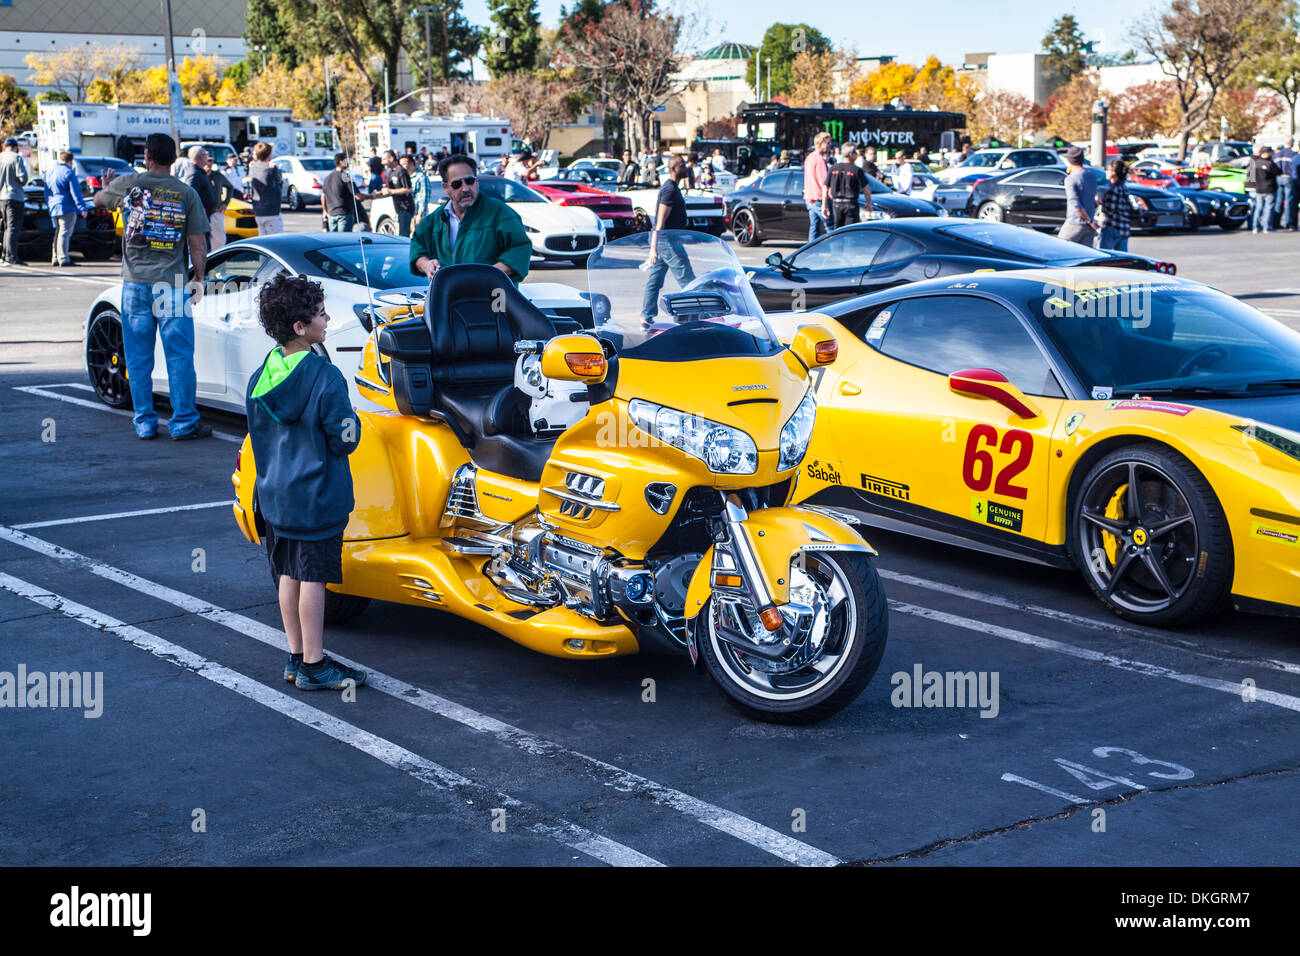 A custom three wheel Motorcycle next to a Ferrari race car Stock Photo